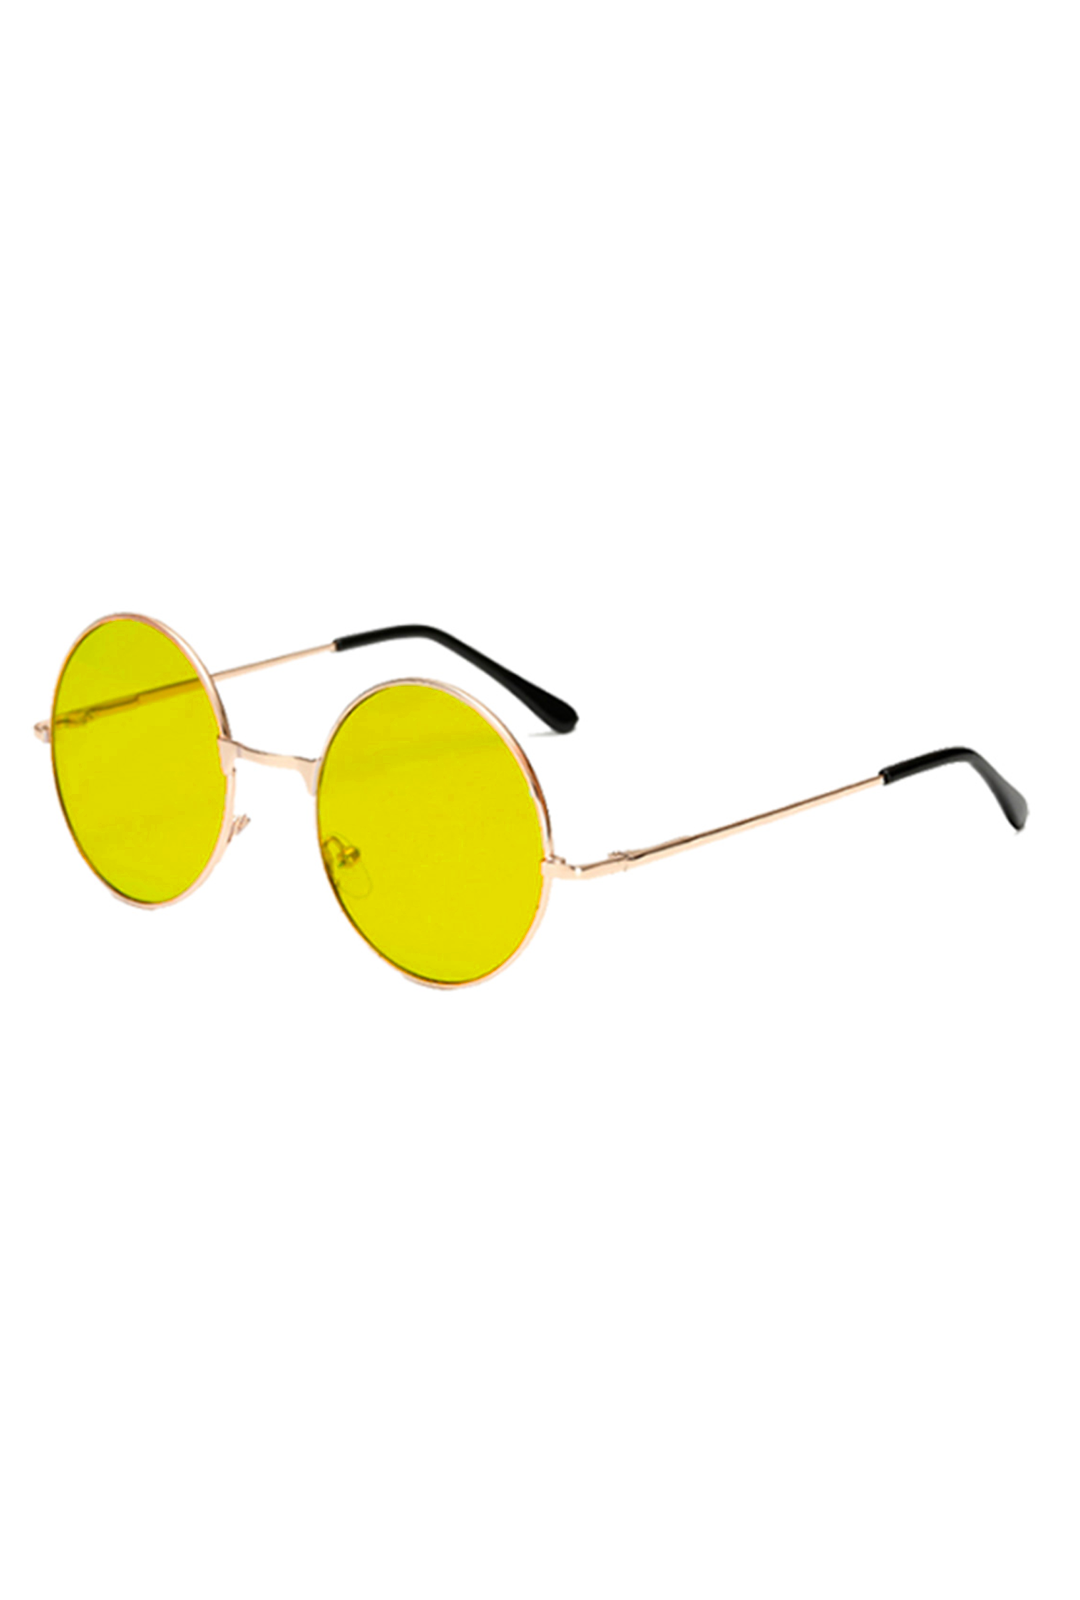 Hippy Circle Yellow Glasses